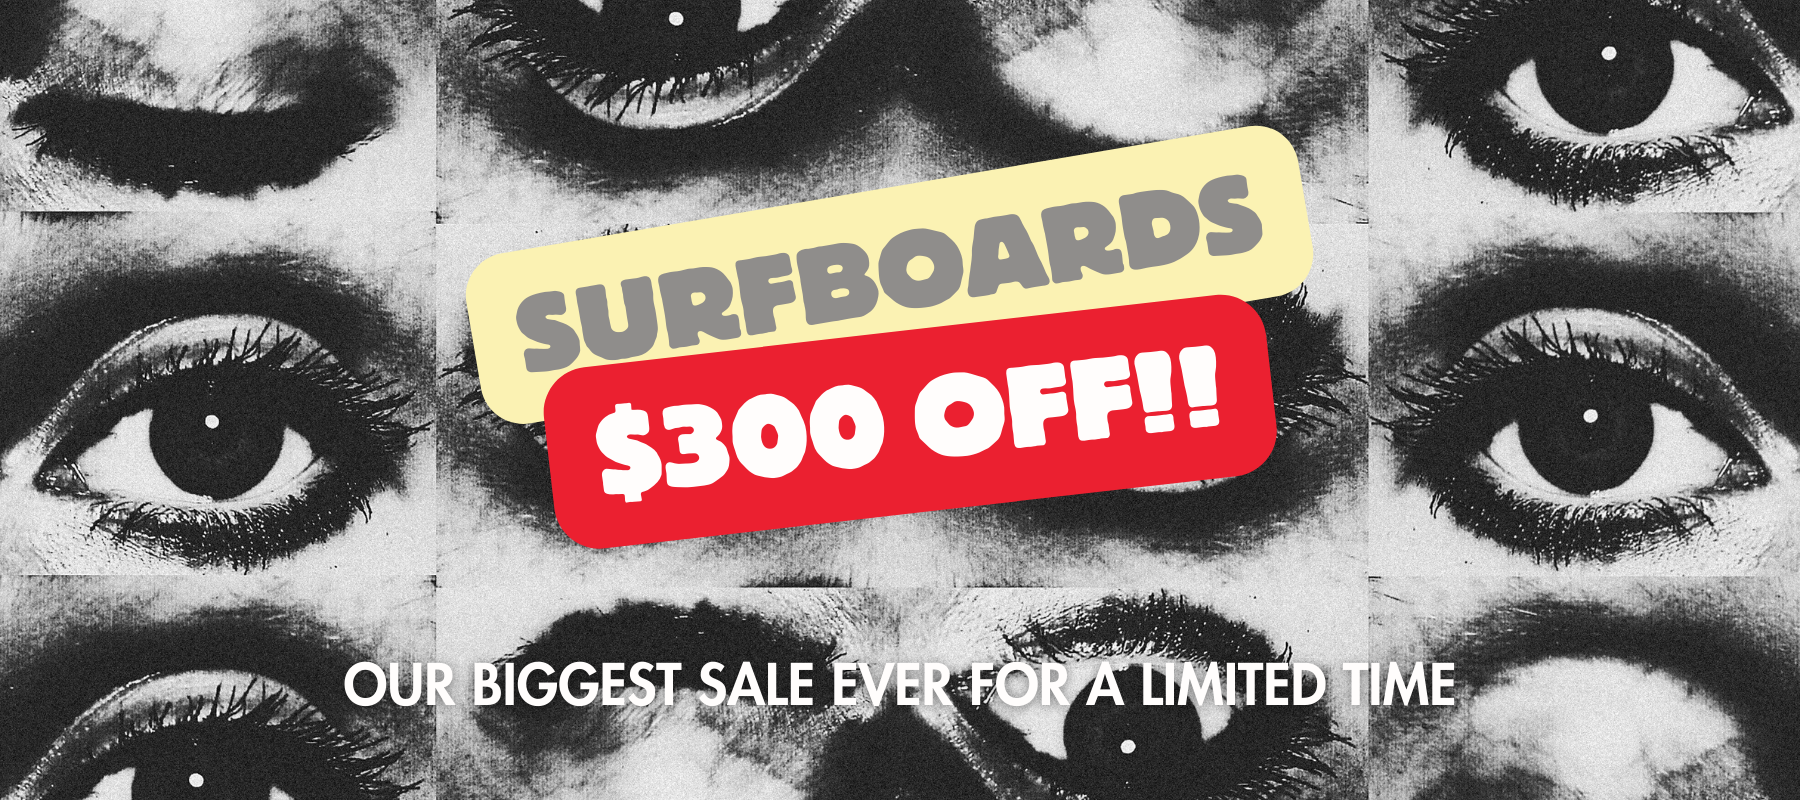 SHOWROOM SURFBOARDS ON SALE